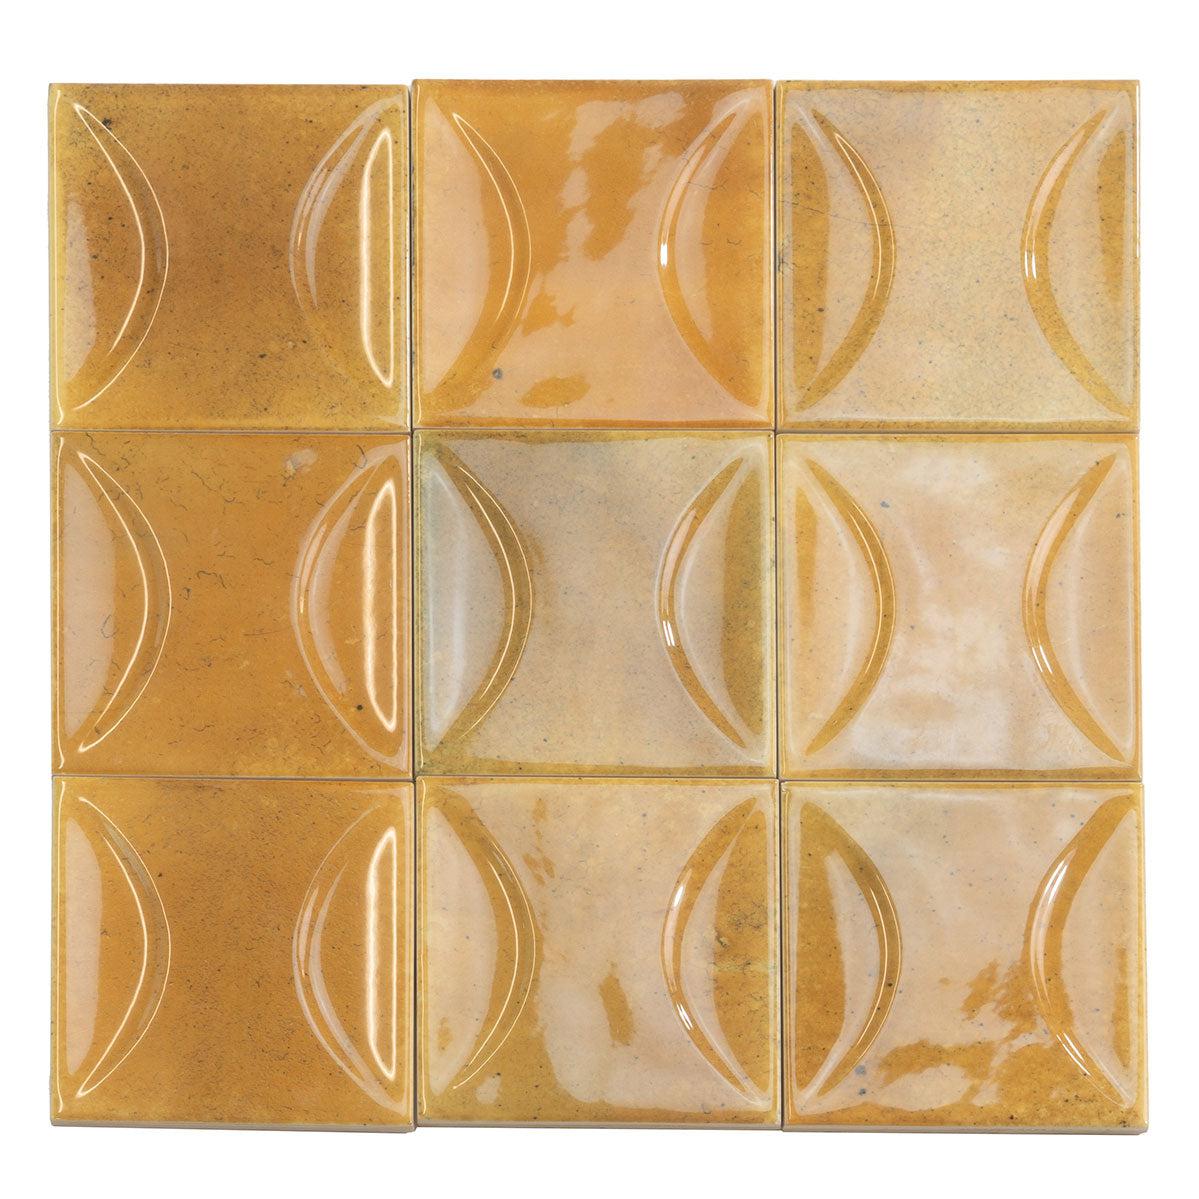 Luna Arc Caramel 4x4 Ceramic Square Tiles